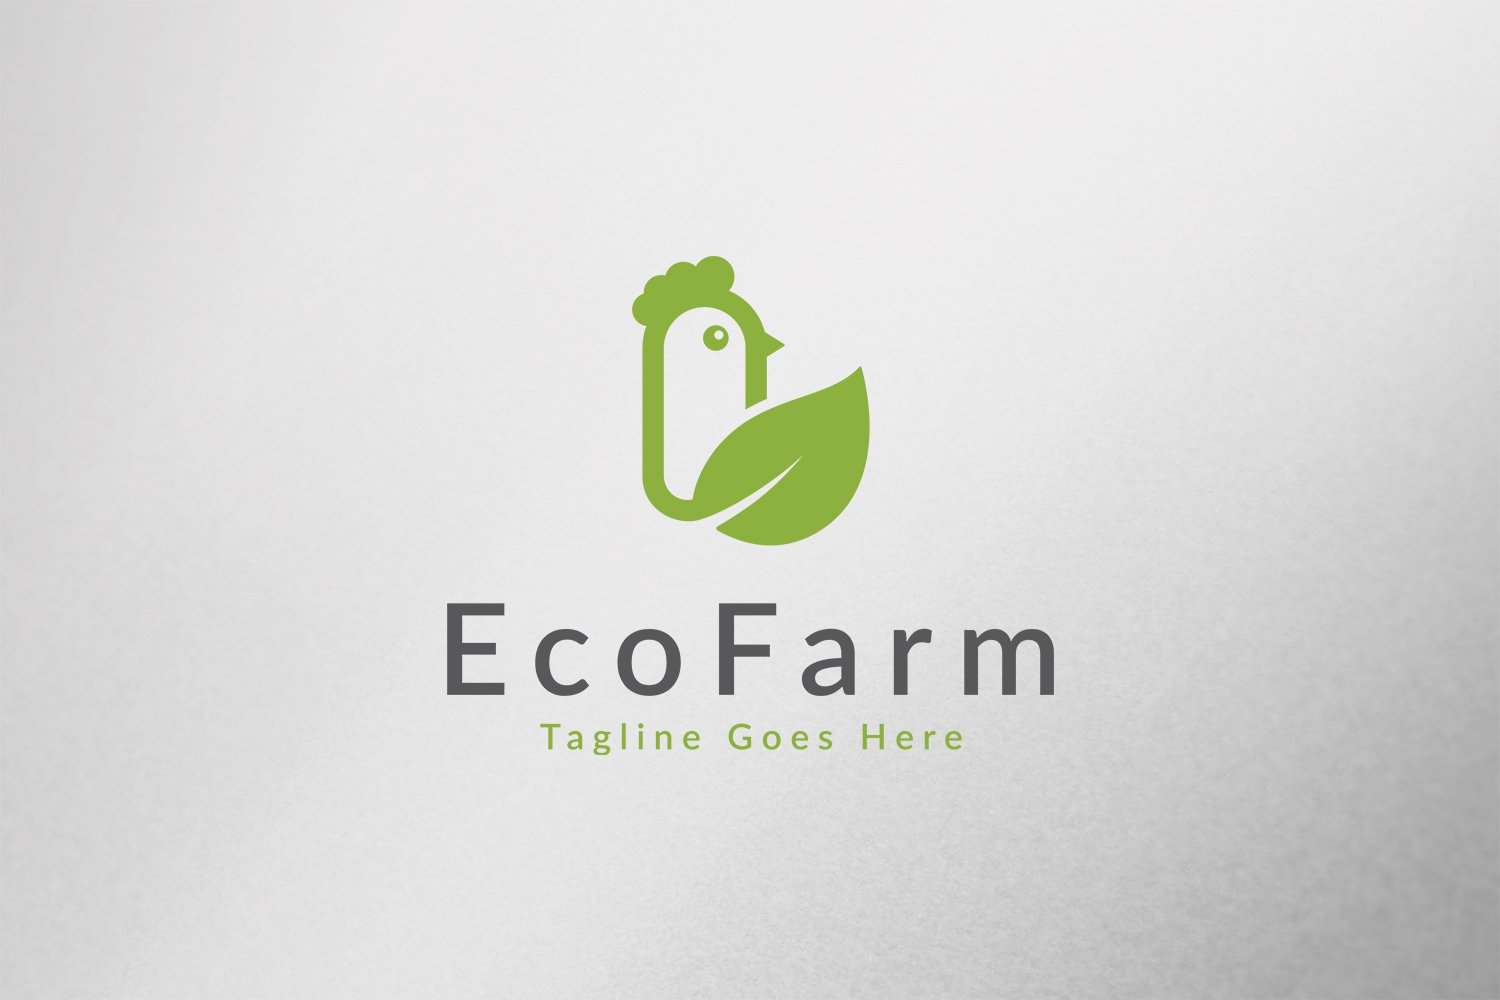 Eco Chicken Farm Logo cover image.